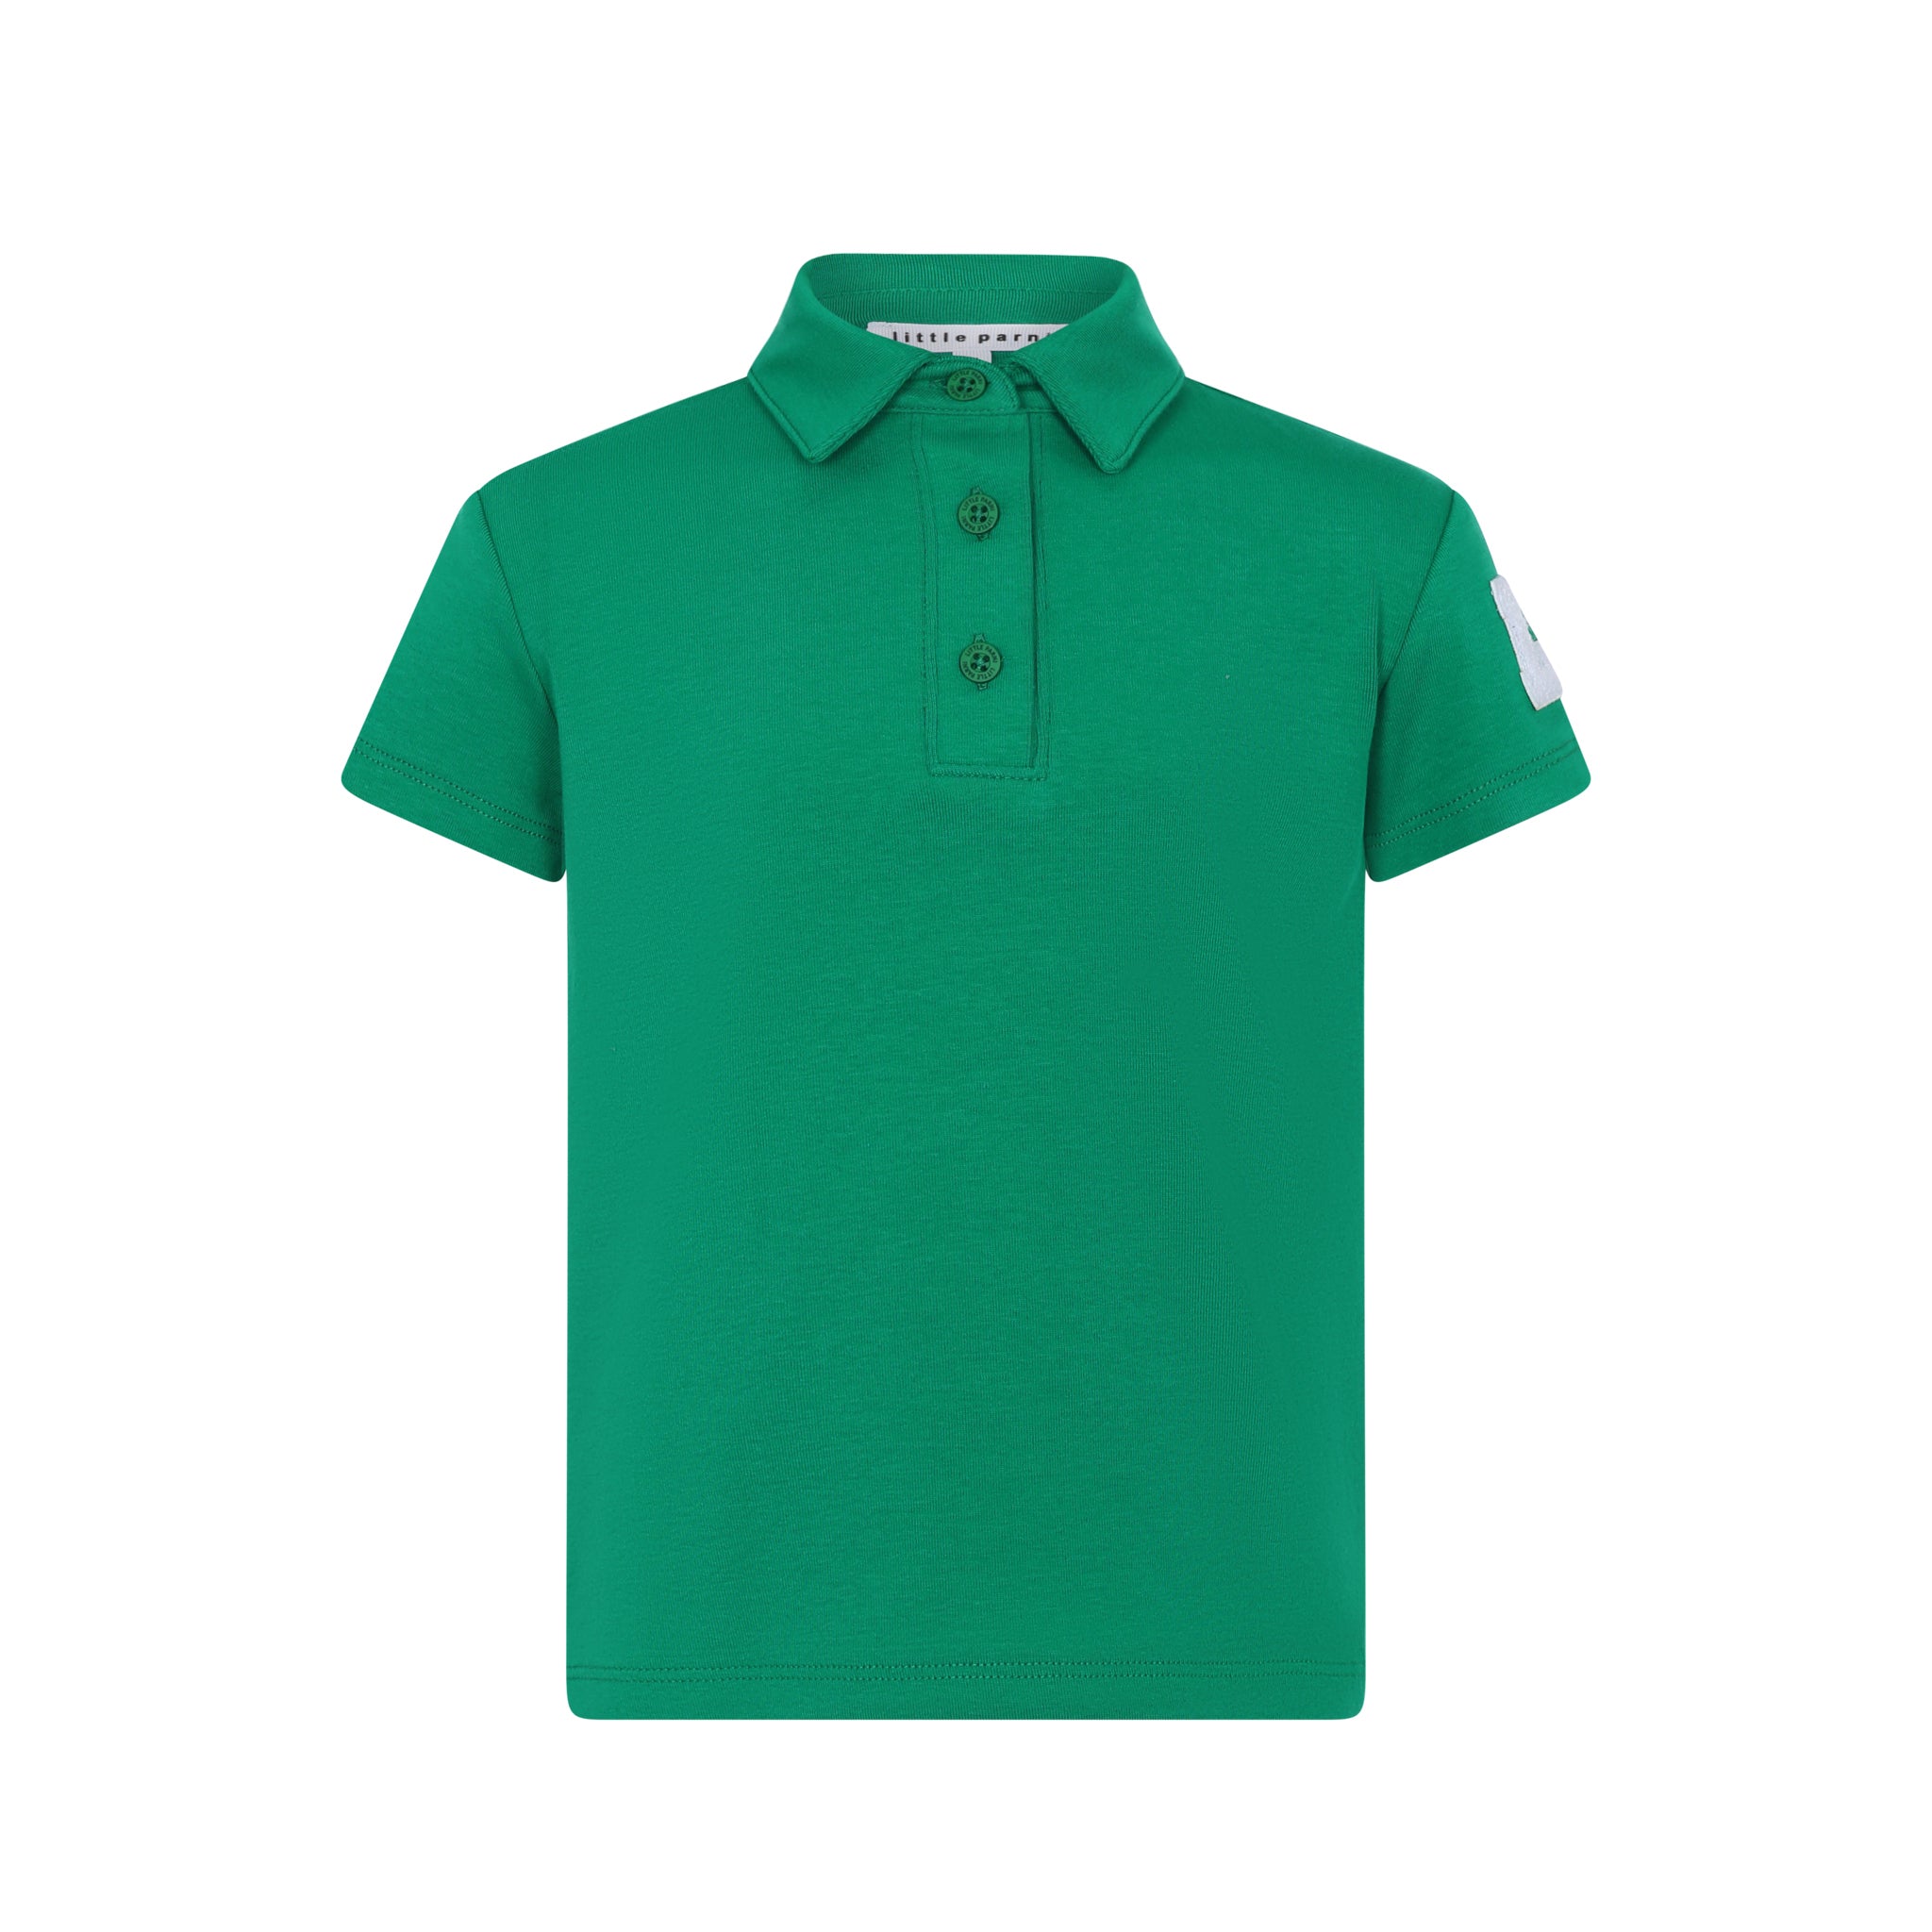 Green Collar Shirt